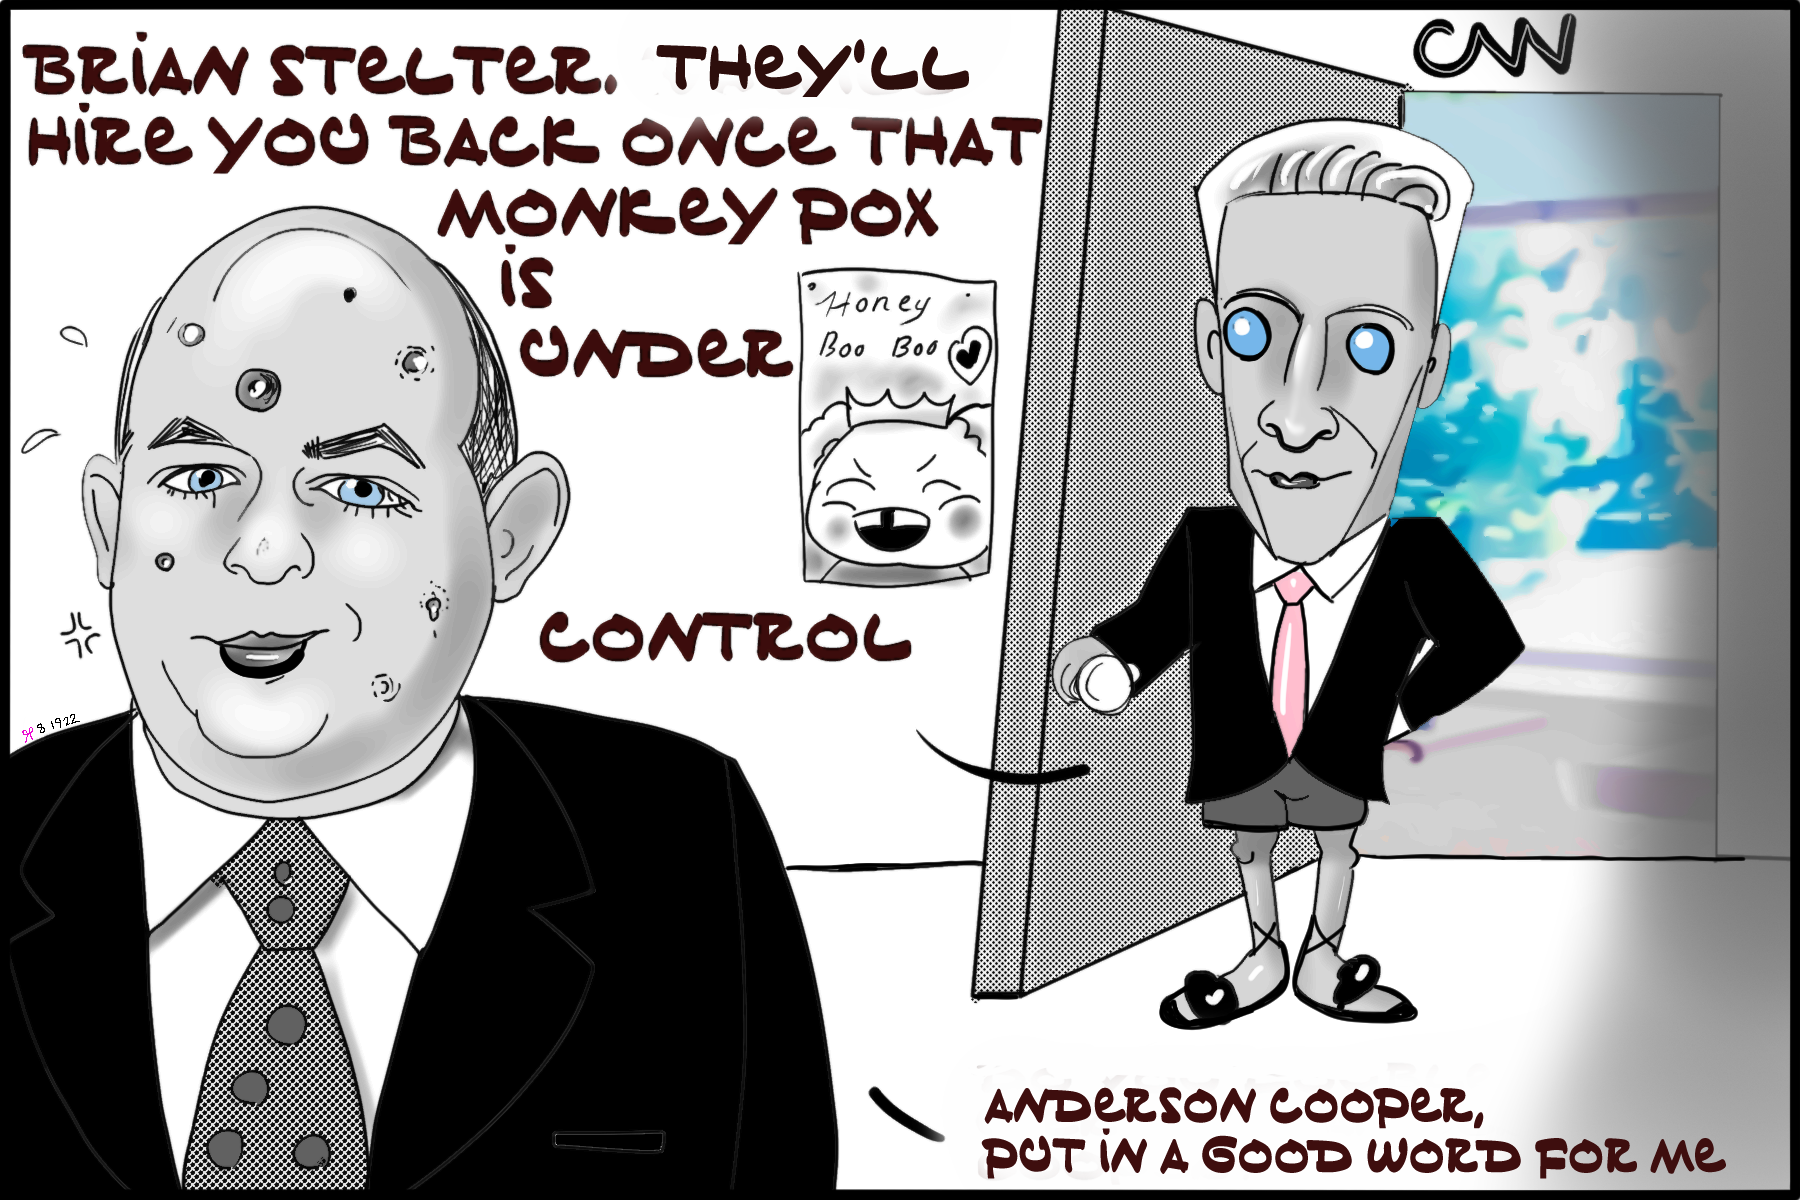 Brian Stelter fired from CNN Monkeypox Political Cartoon NFT post thumbnail image